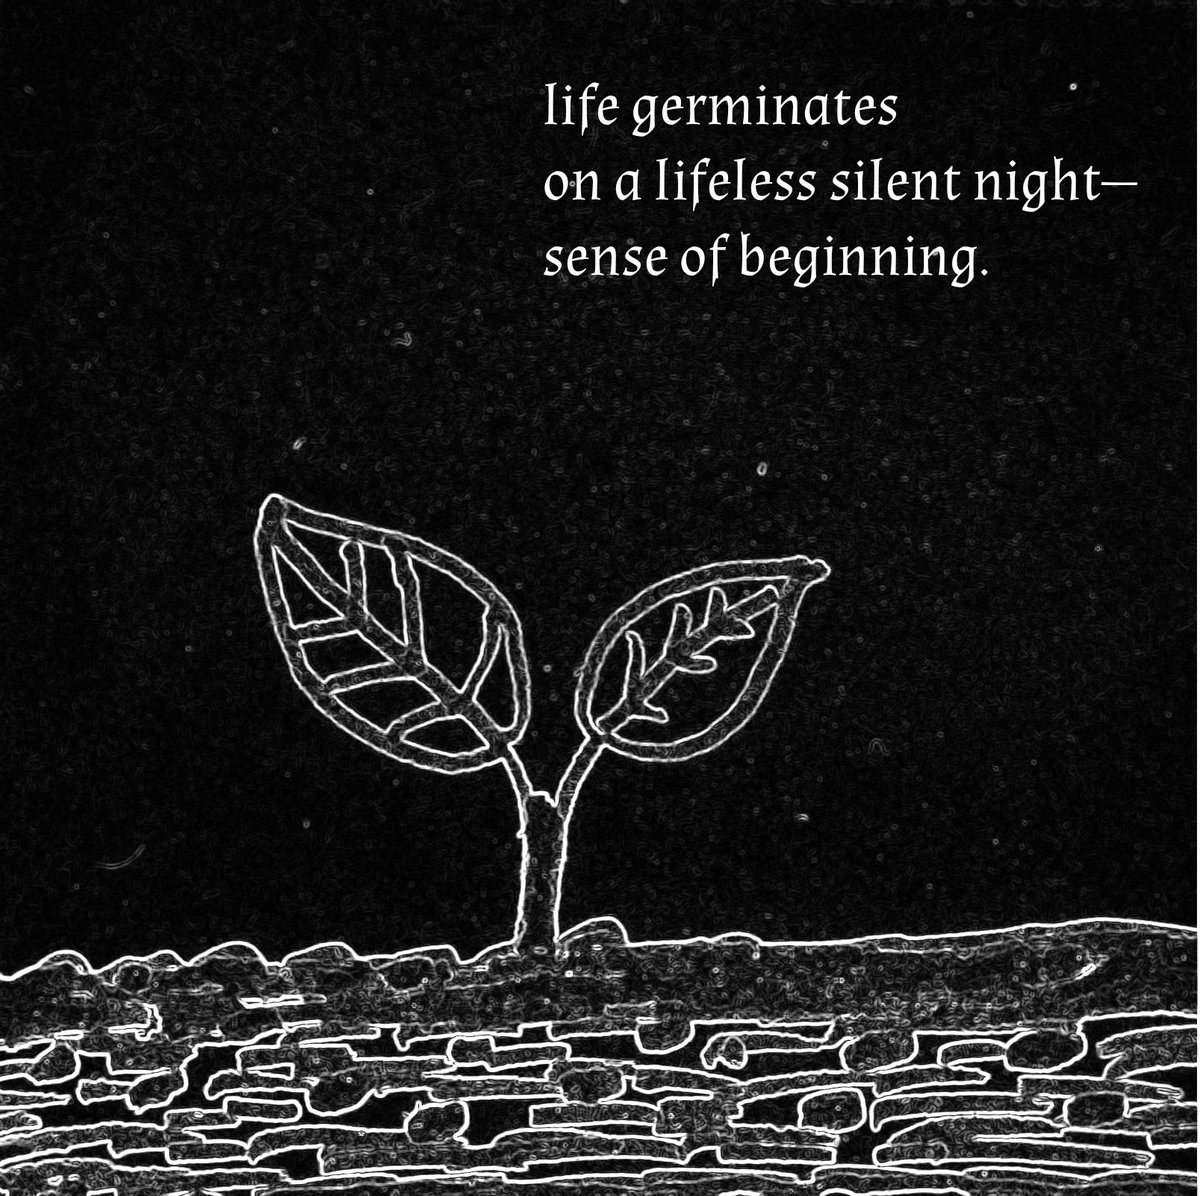 life germinates
on a lifeless silent night—
sense of beginning. 
#haiga 
#haiku